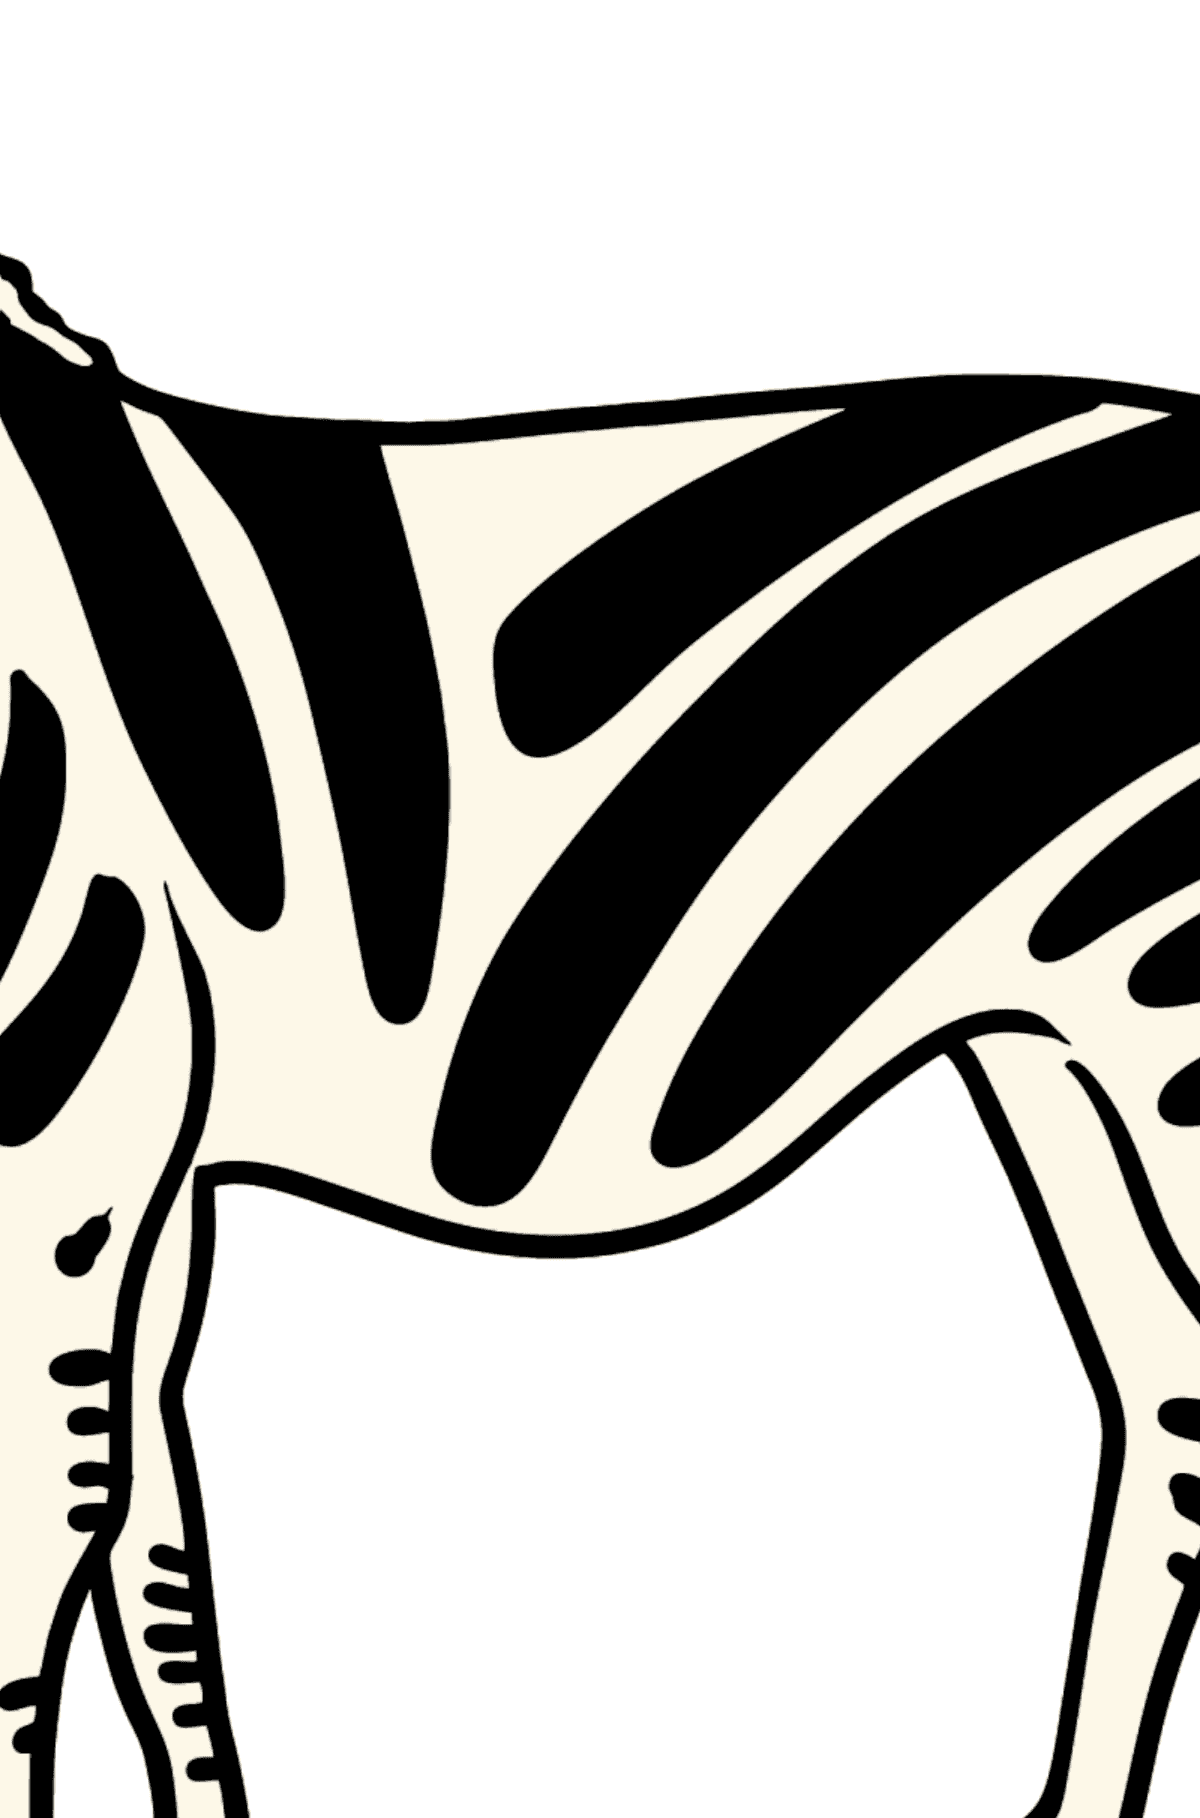 Zebra Ausmalbild - Mathe Ausmalbilder - Multiplikation für Kinder